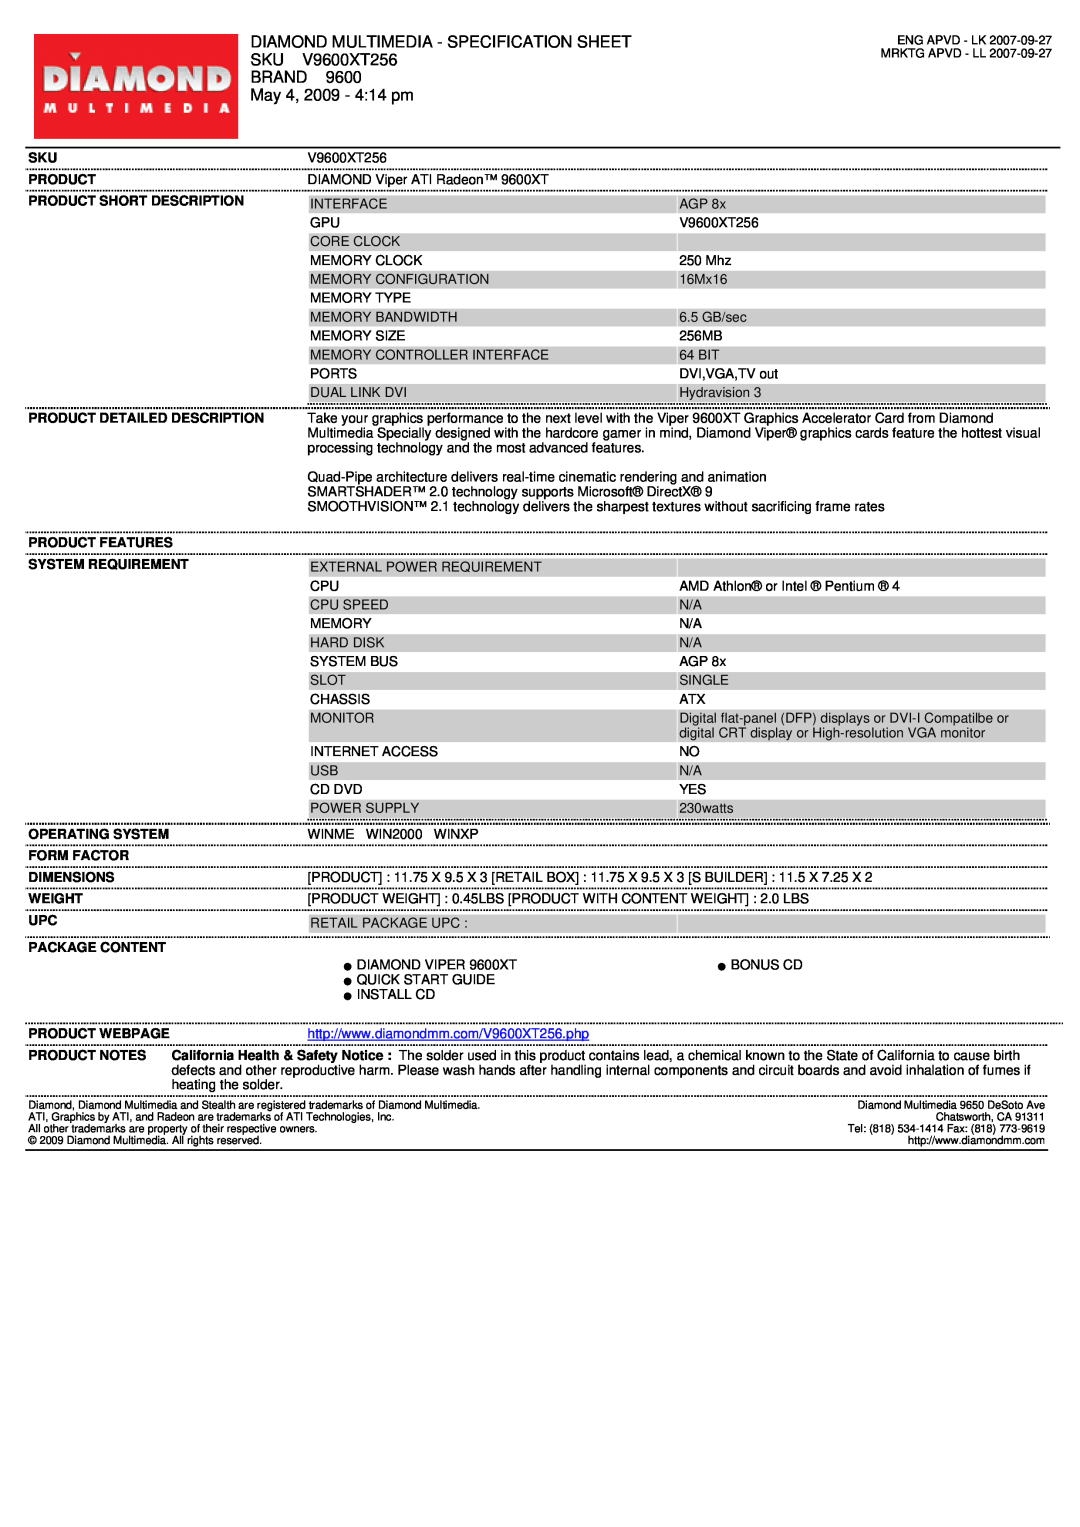 Diamond Multimedia specifications Diamond Multimedia - Specification Sheet, V9600XT256, Brand, May 4, 2009 - 414 pm 